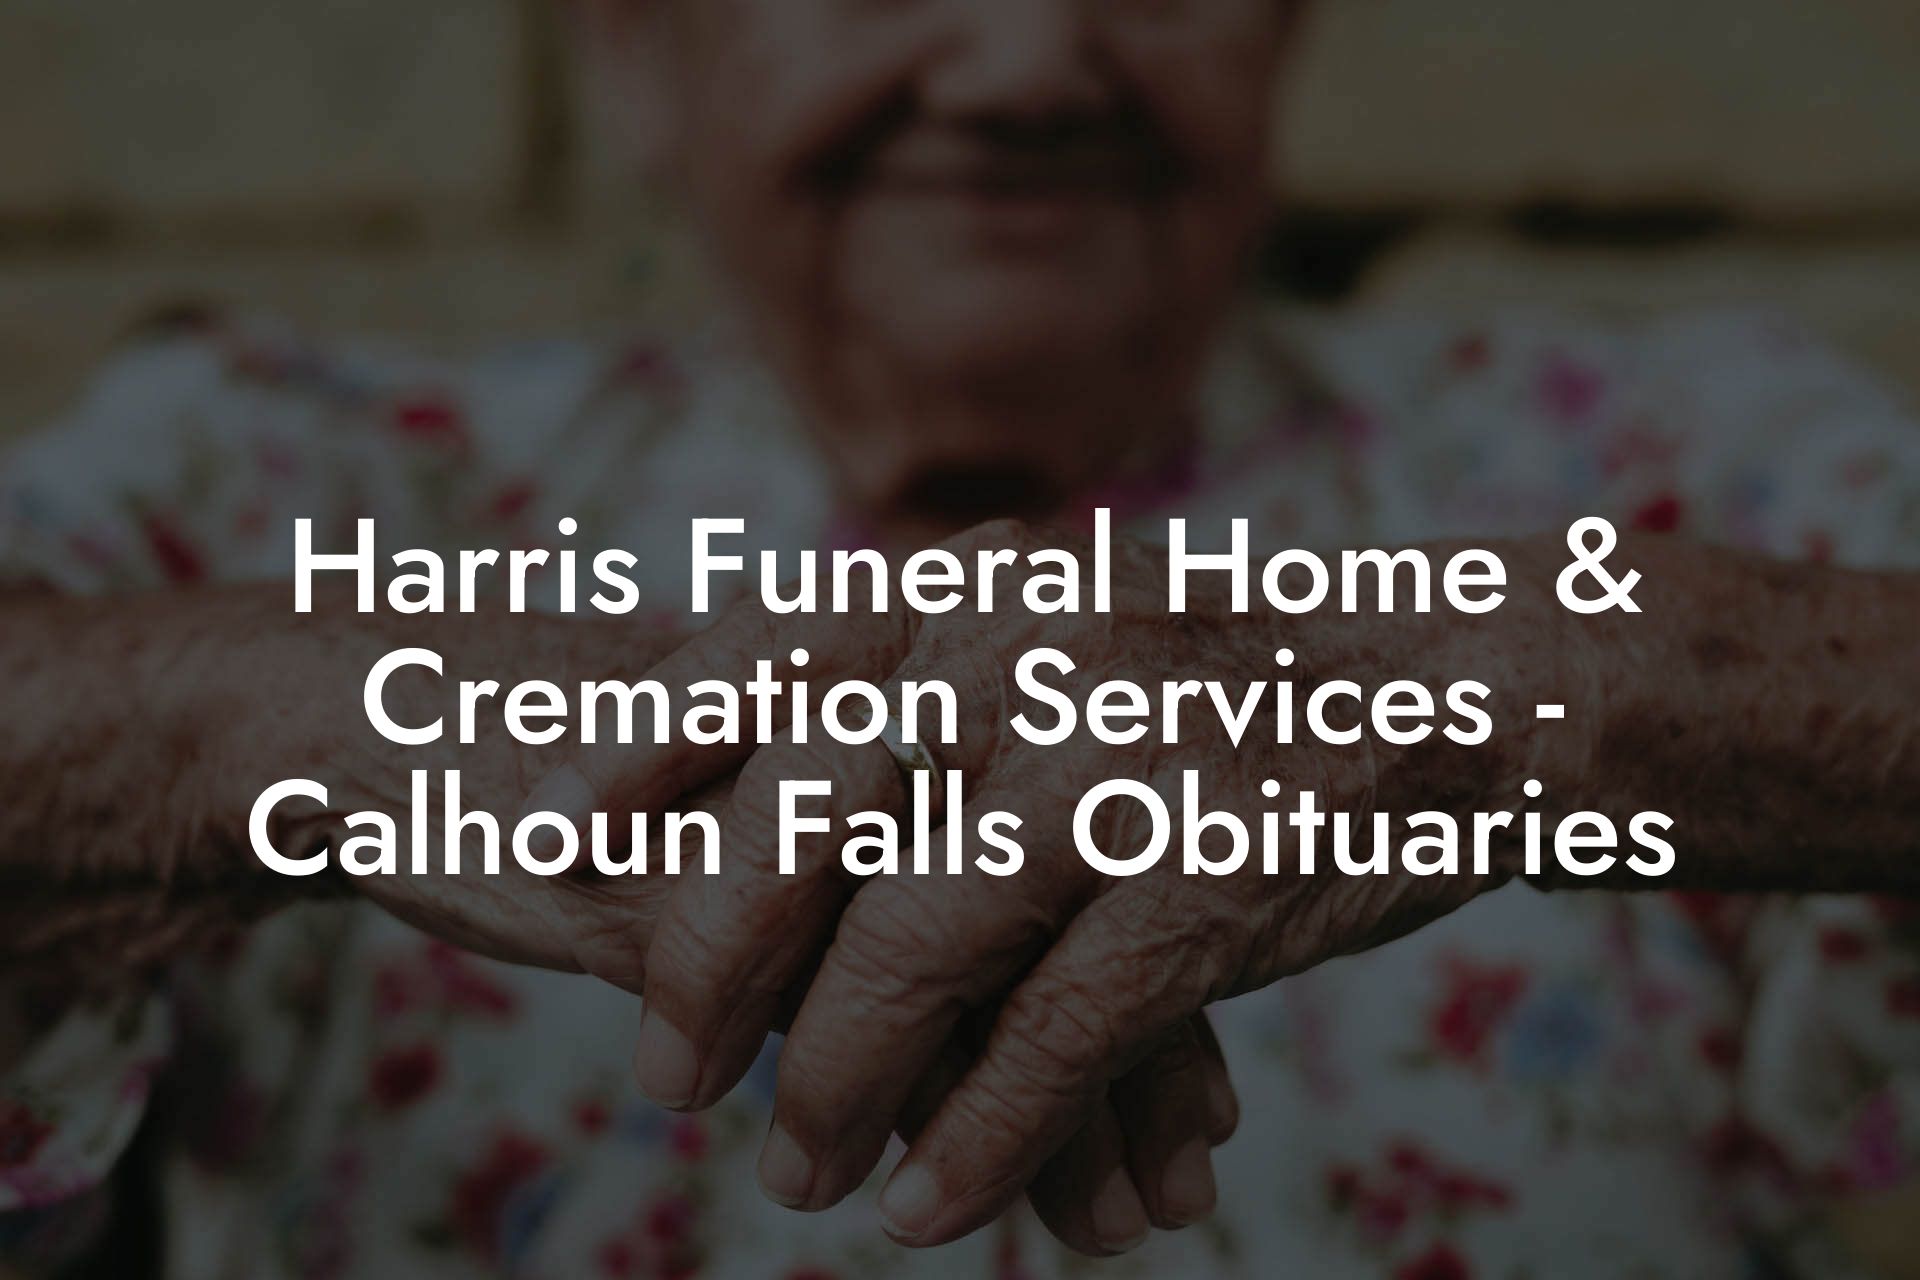 Harris Funeral Home & Cremation Services - Calhoun Falls Obituaries